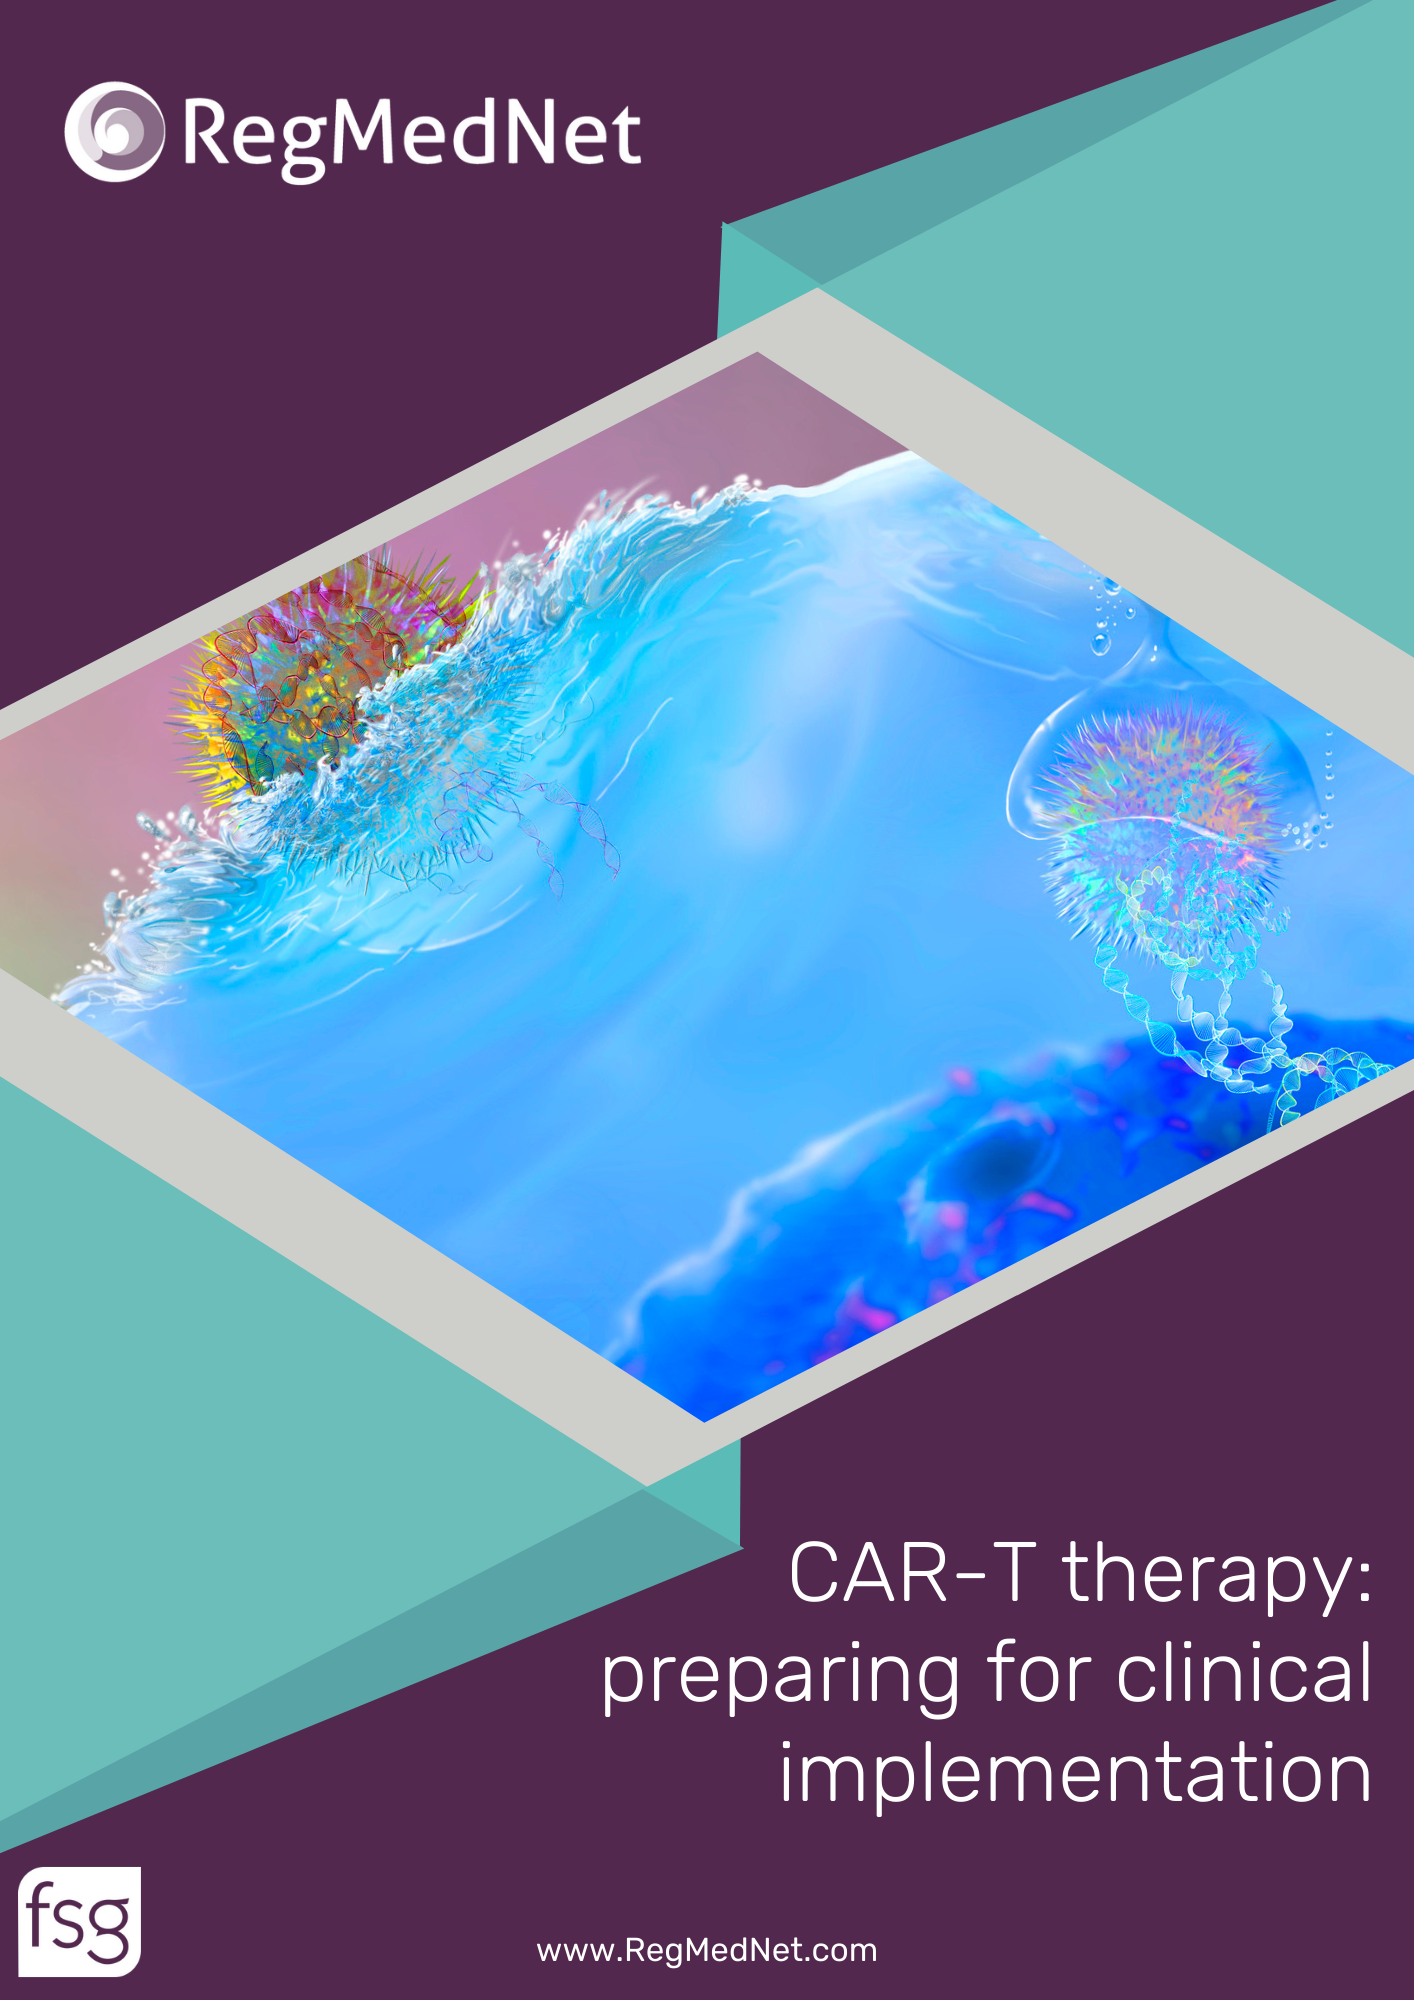 RMN marketing eBook - CAR-T therapy